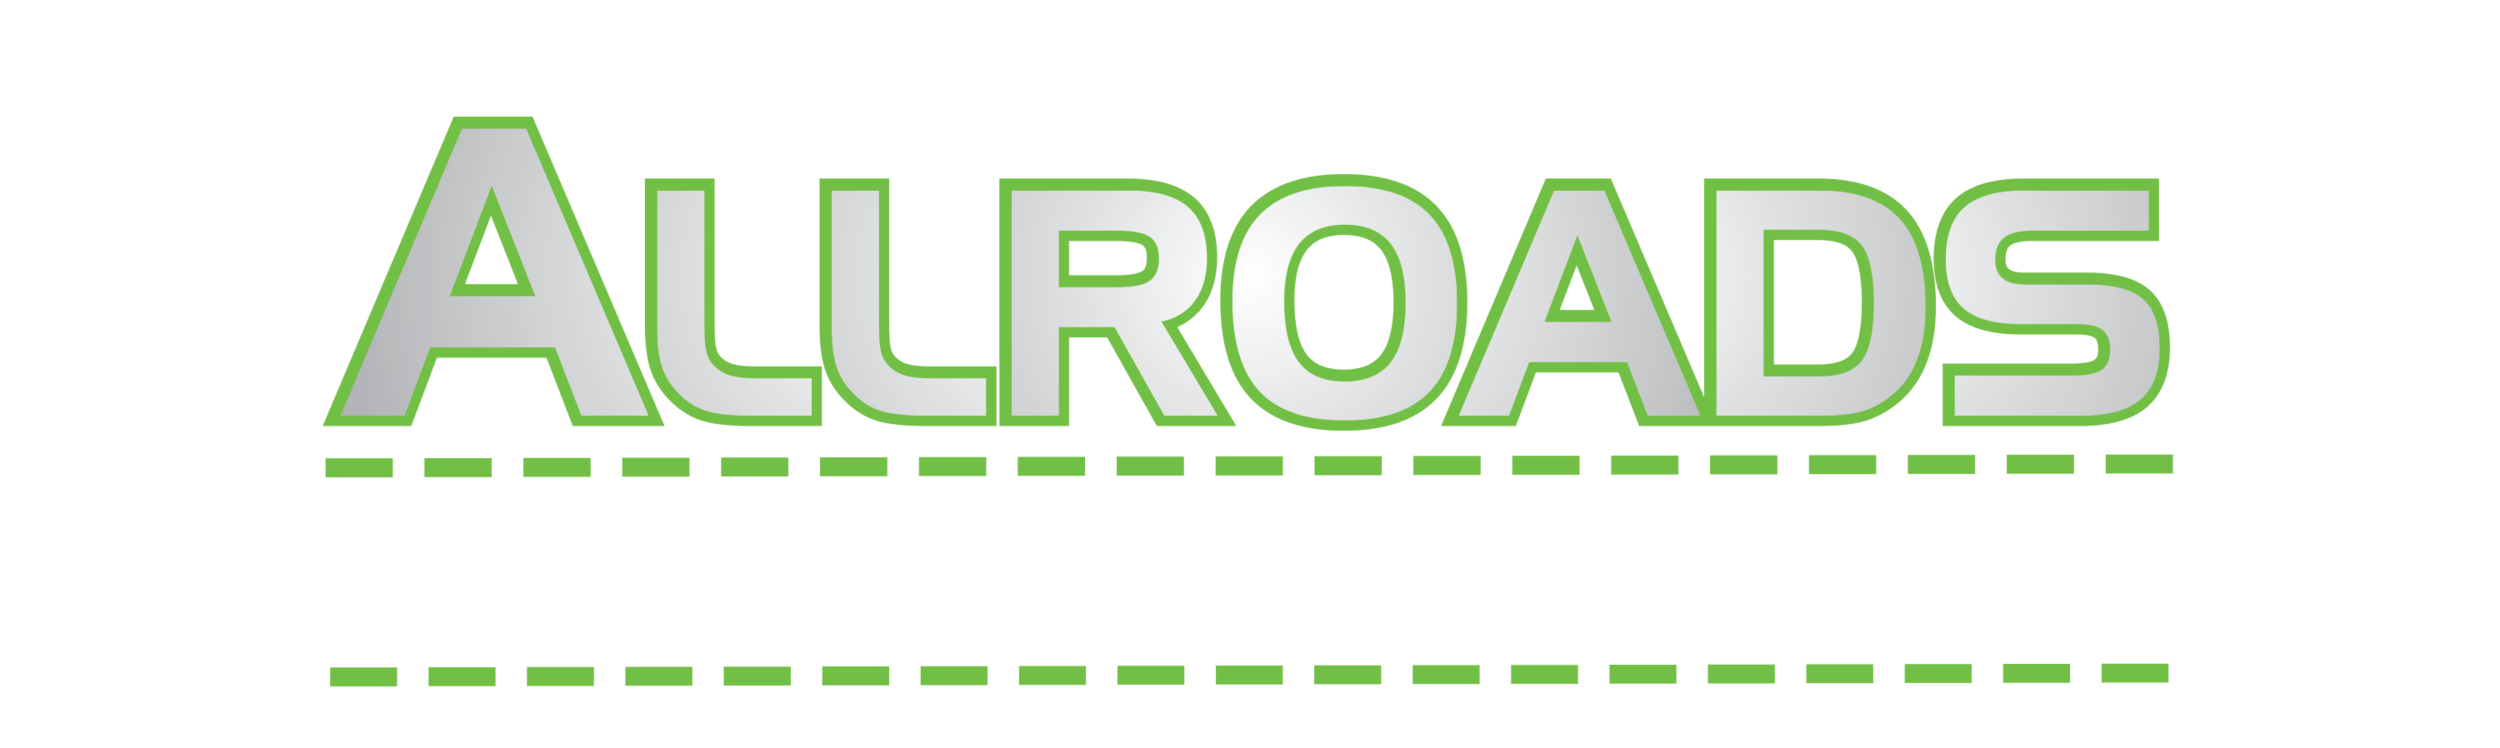 Allroads Crane Truck Hire | Flatbed &amp; Crane Truck Hire Wollongong